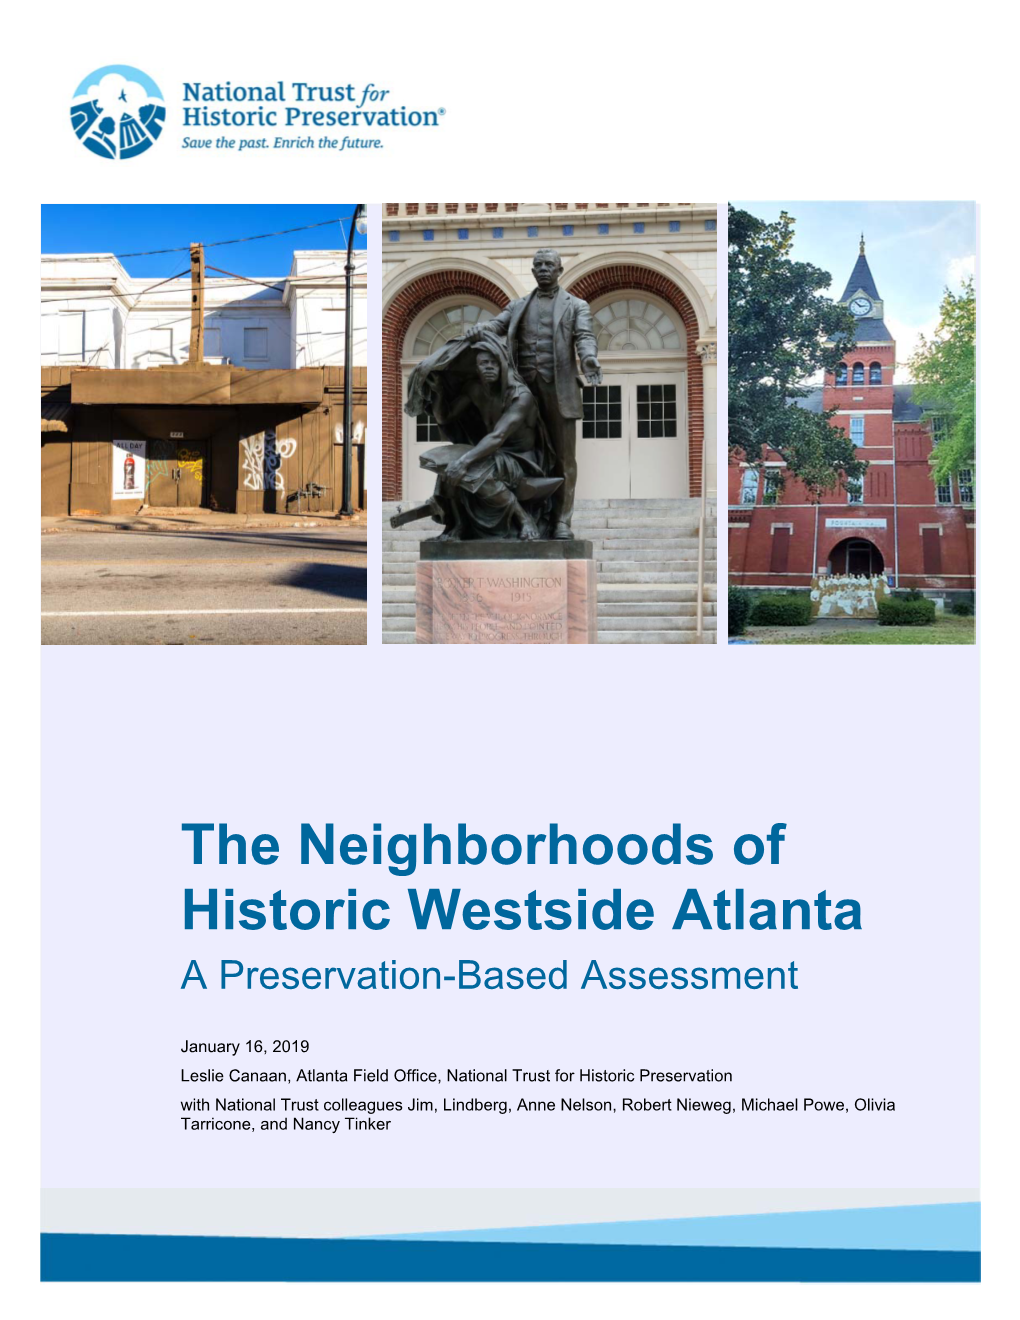 The Neighborhoods of Historic Westside Atlanta a Preservation-Based Assessment